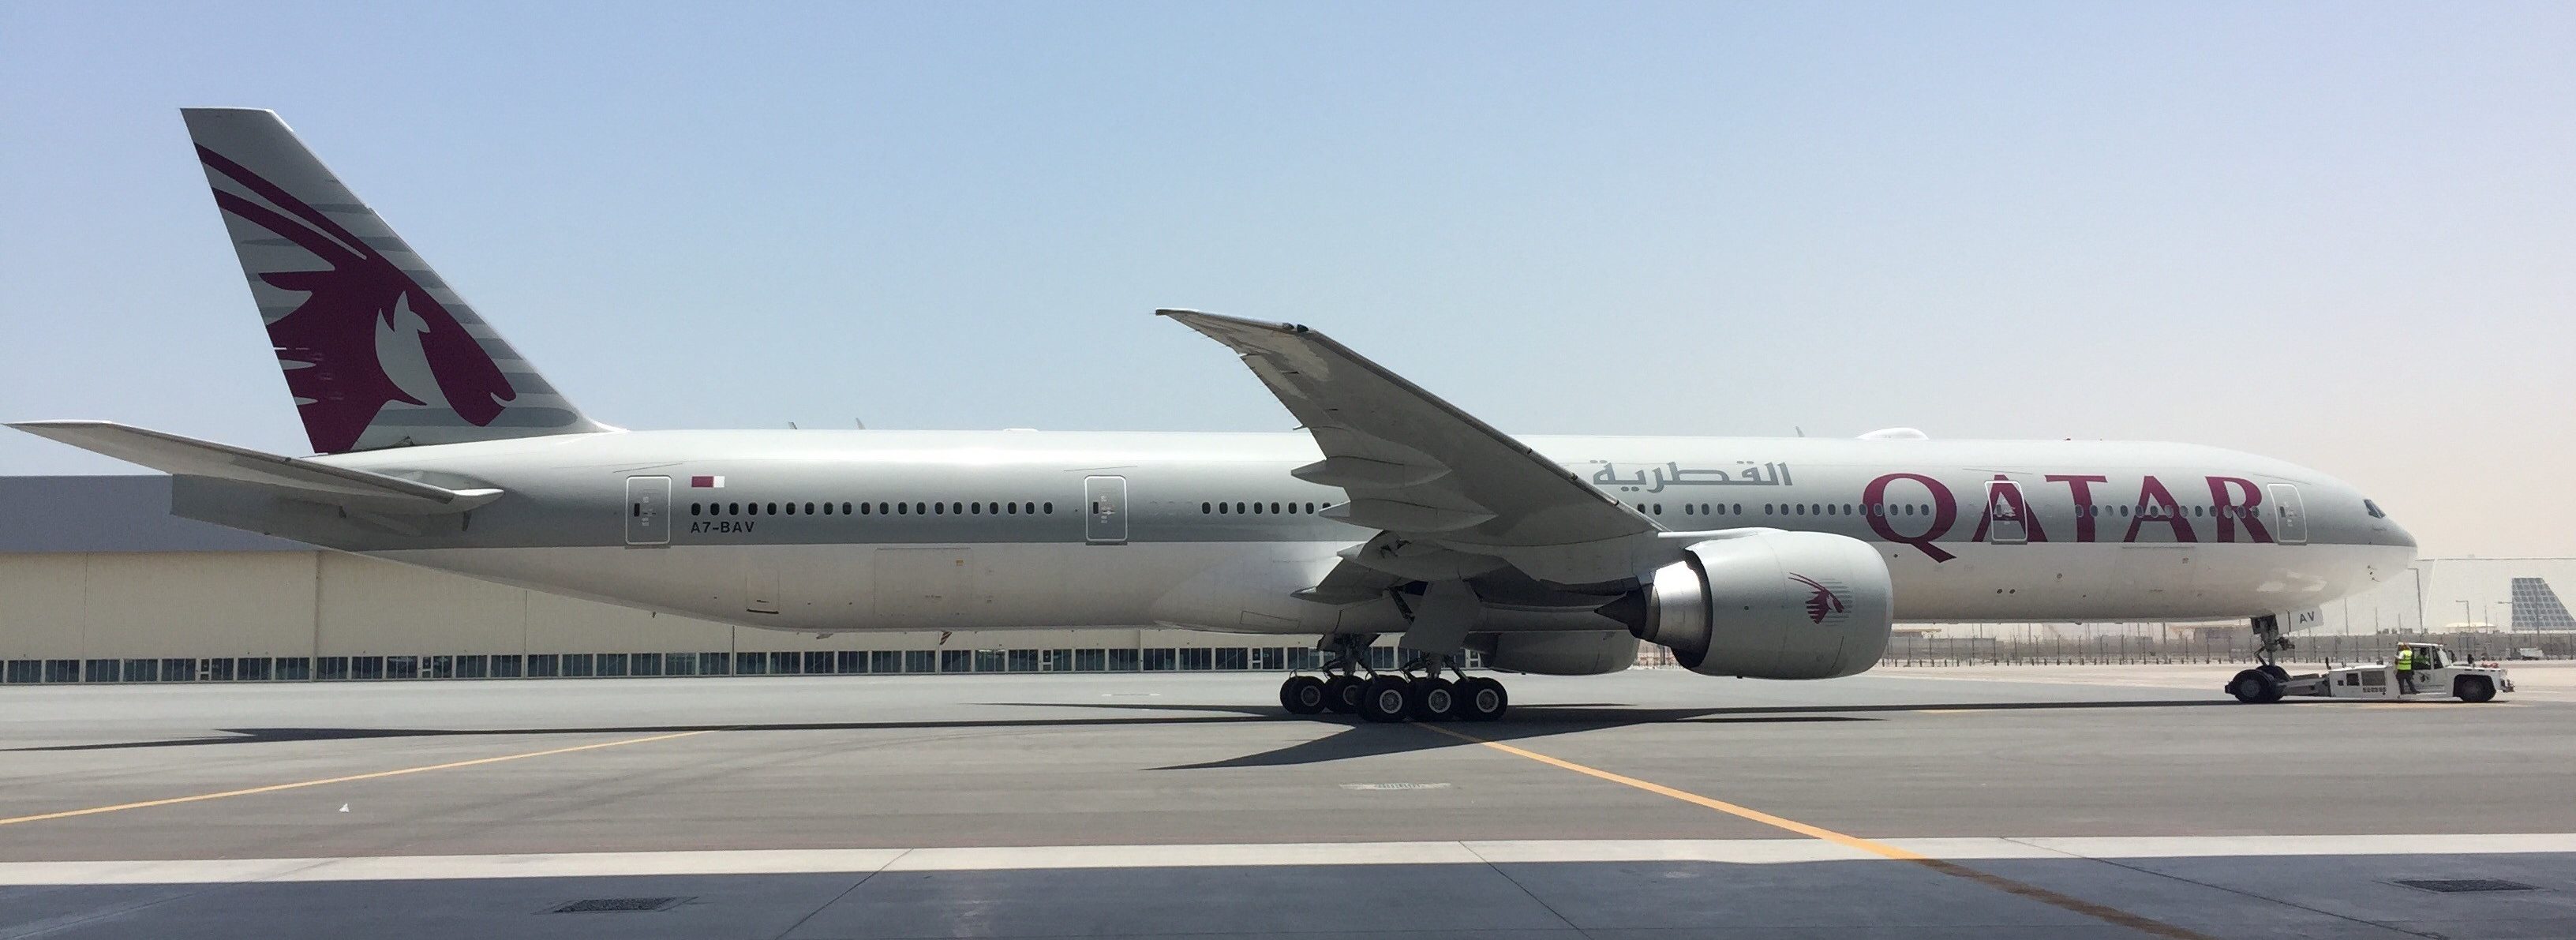 Qatar Airways encarga a Boeing seis aviones por 2.160 millones